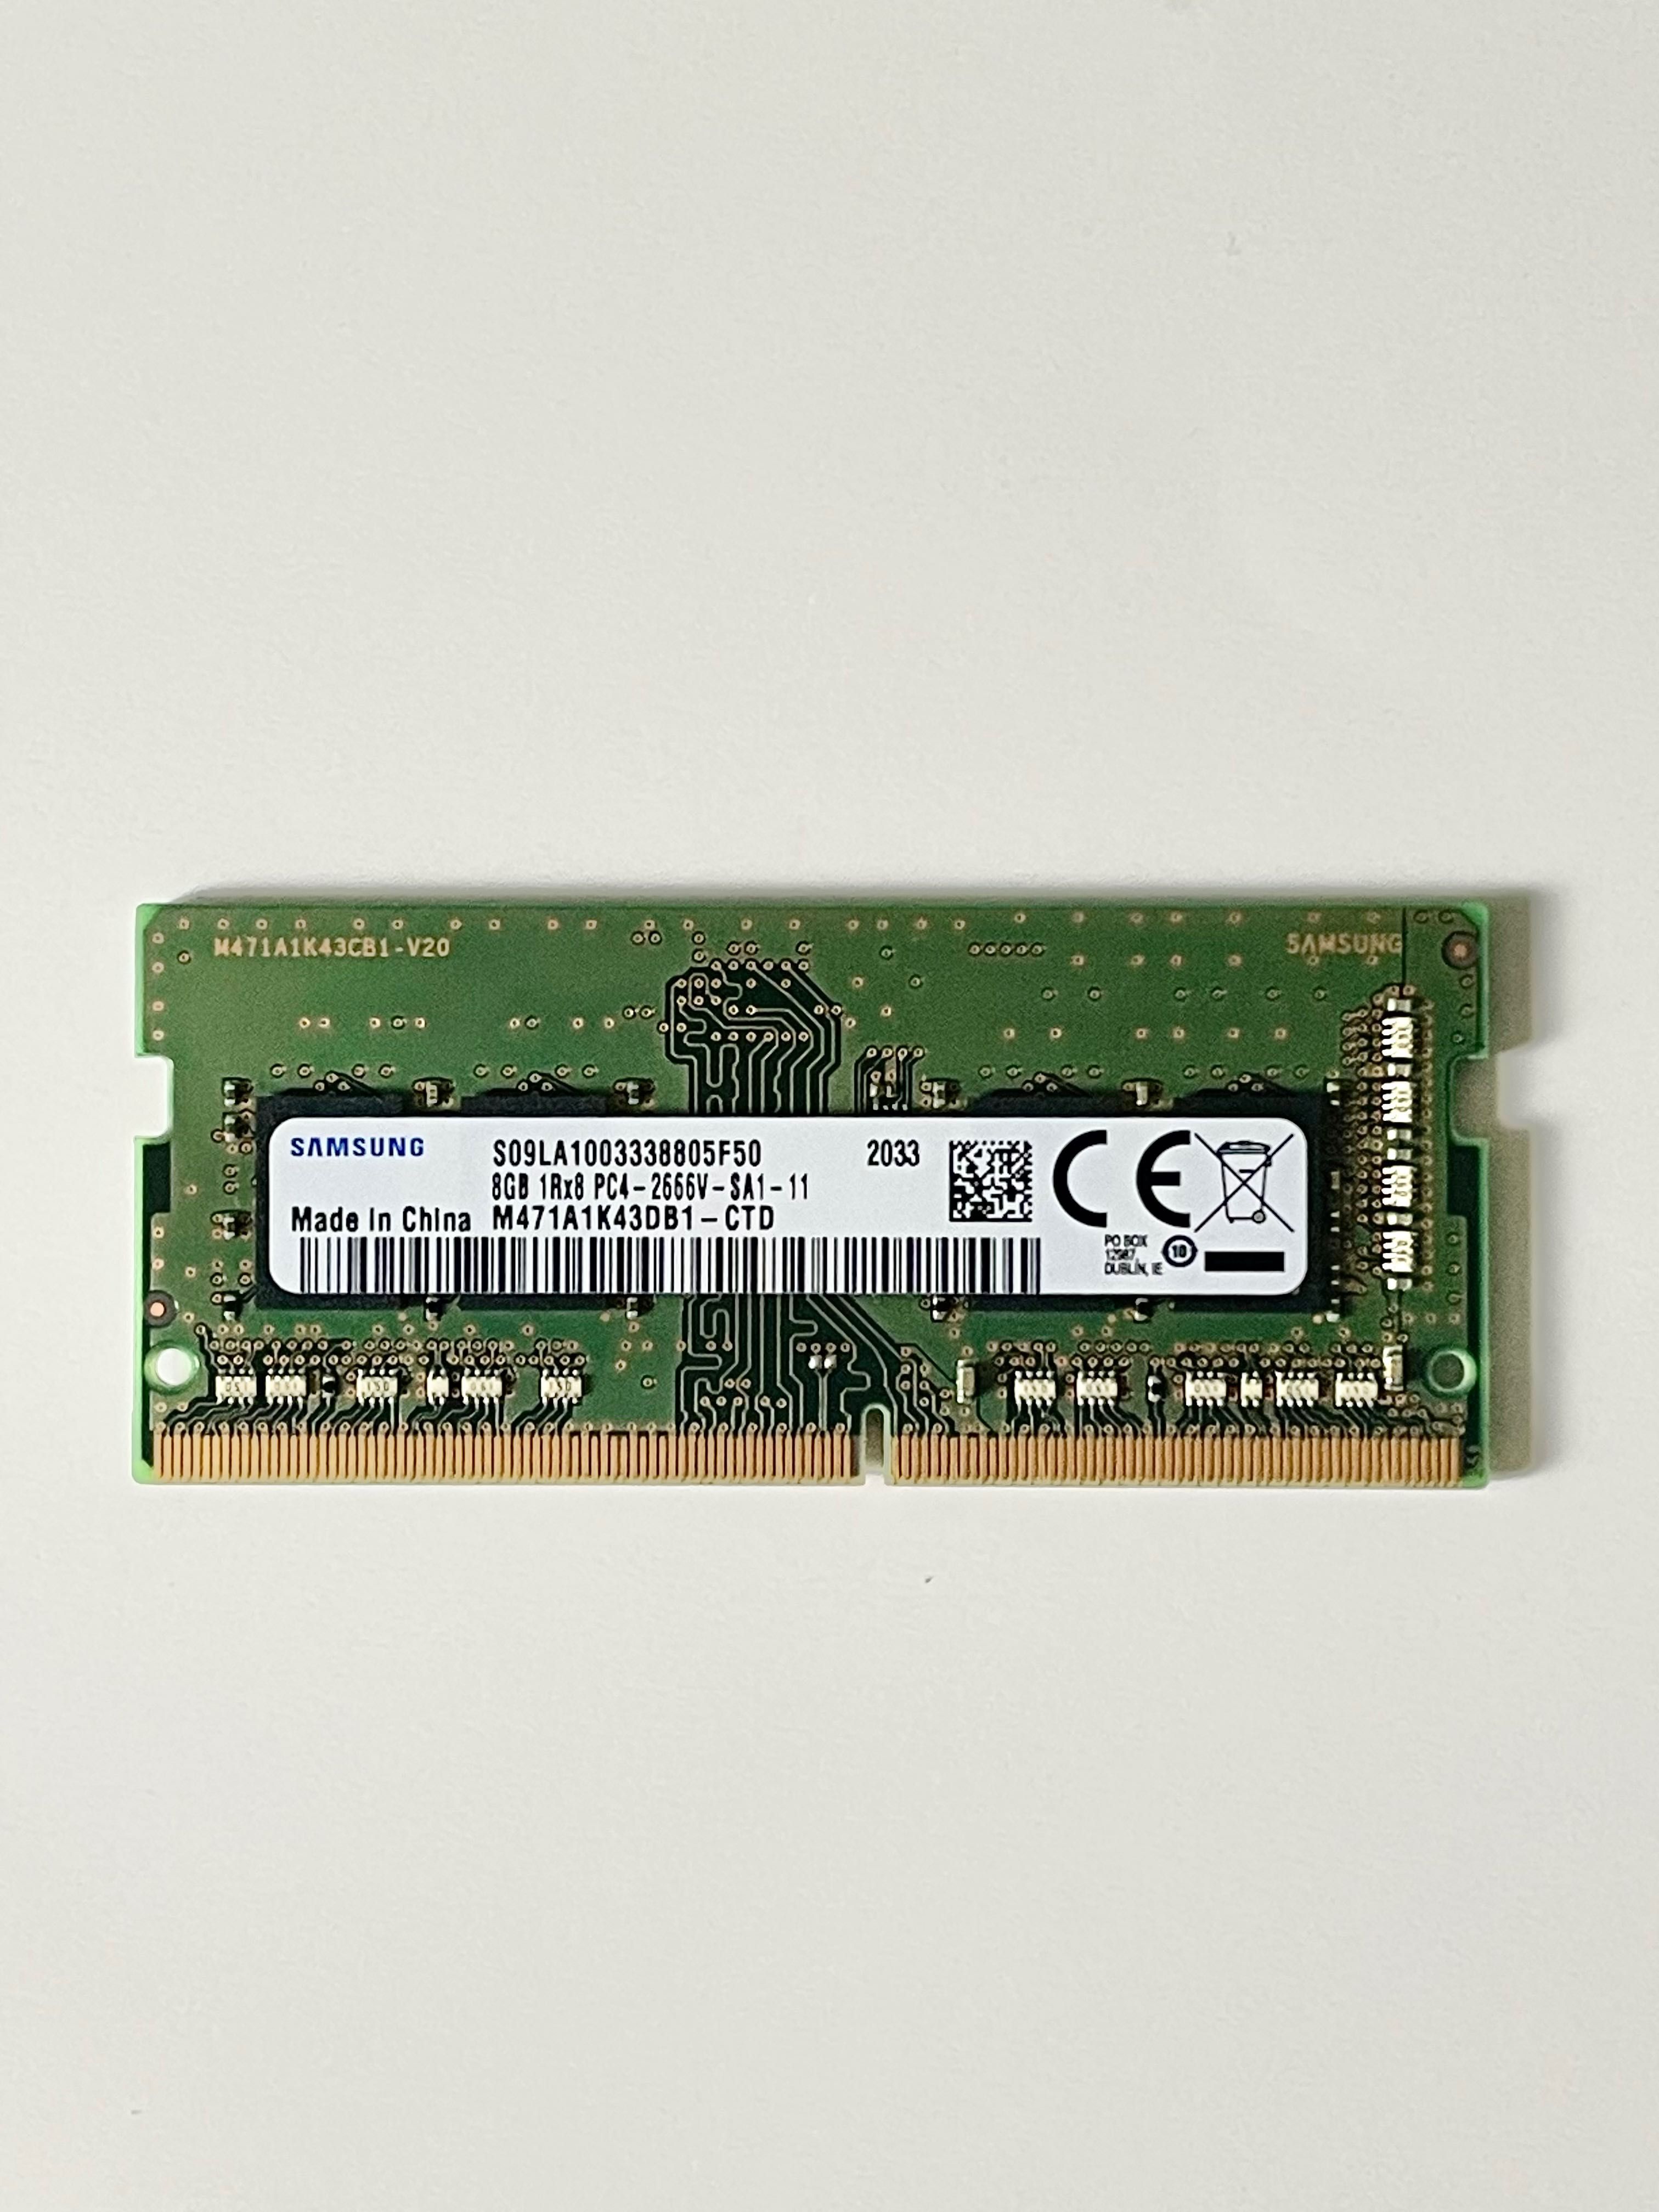 Ноутбучная память Samsung 8 GB SO-DIMM DDR4 2666 MHz (M471A1K43DB1)